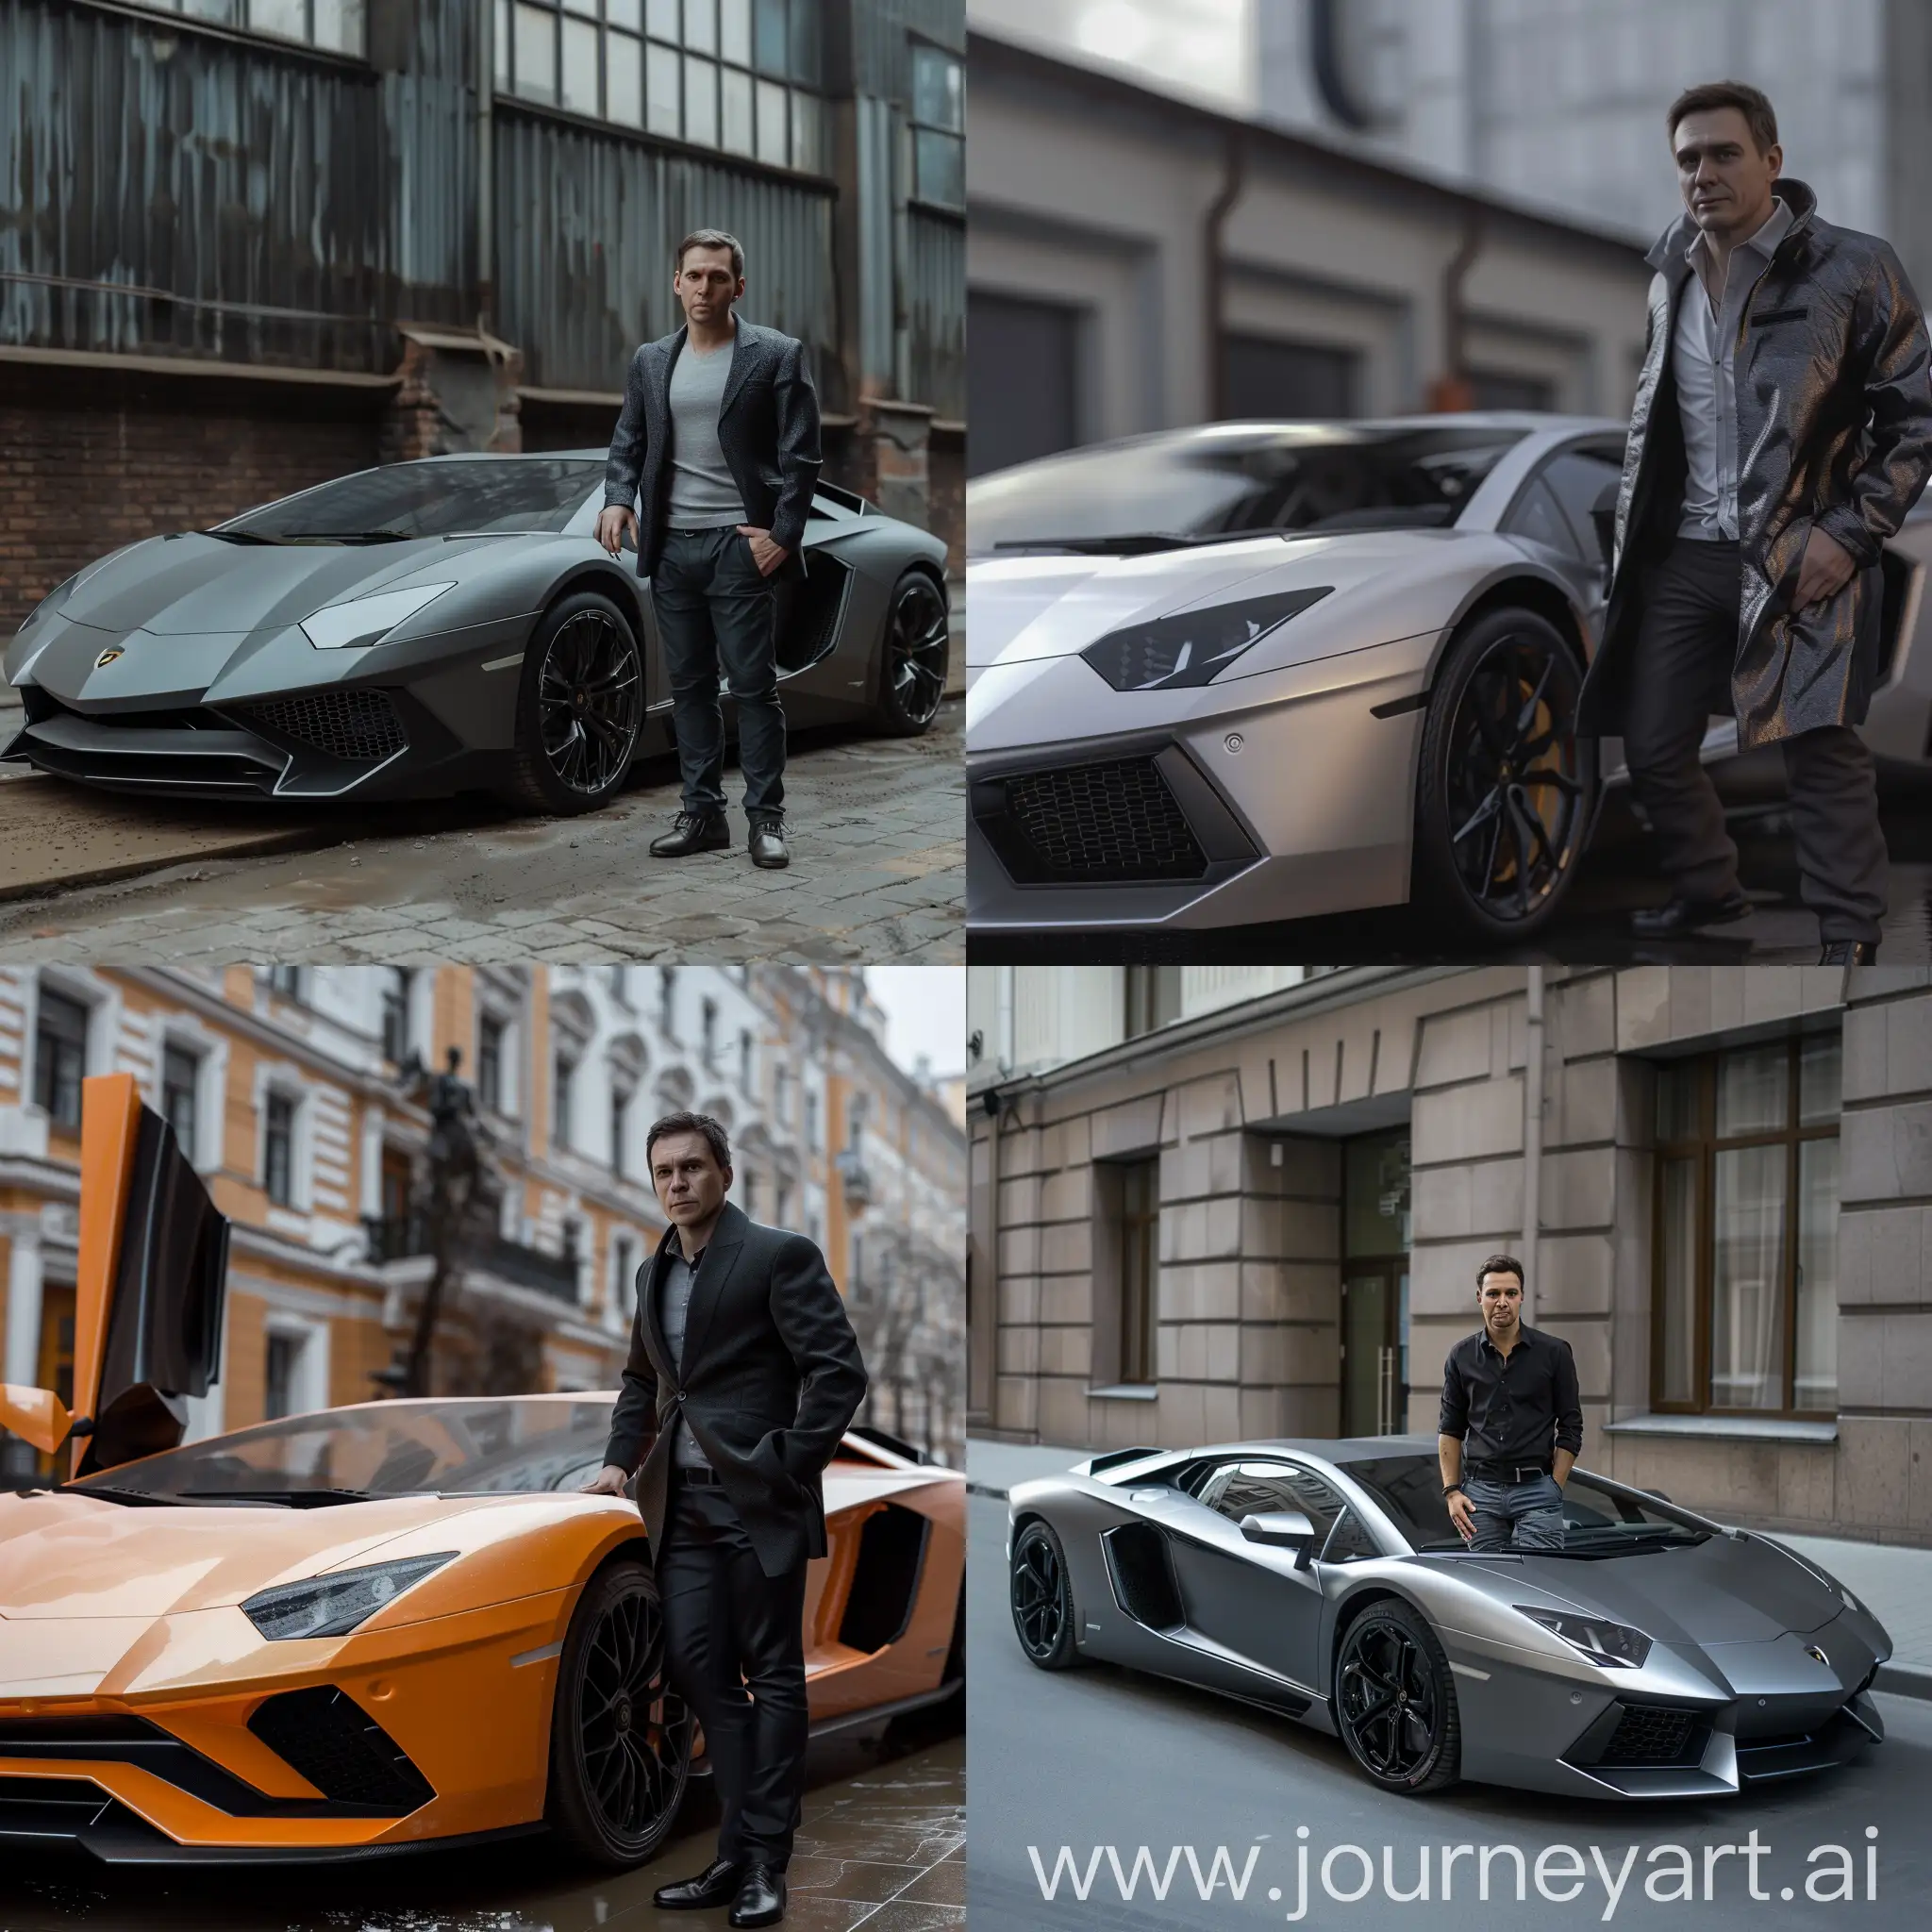 Alexey-Navalny-Standing-beside-Lamborghini-Aventador-in-Realistic-8K-HDR-Detail